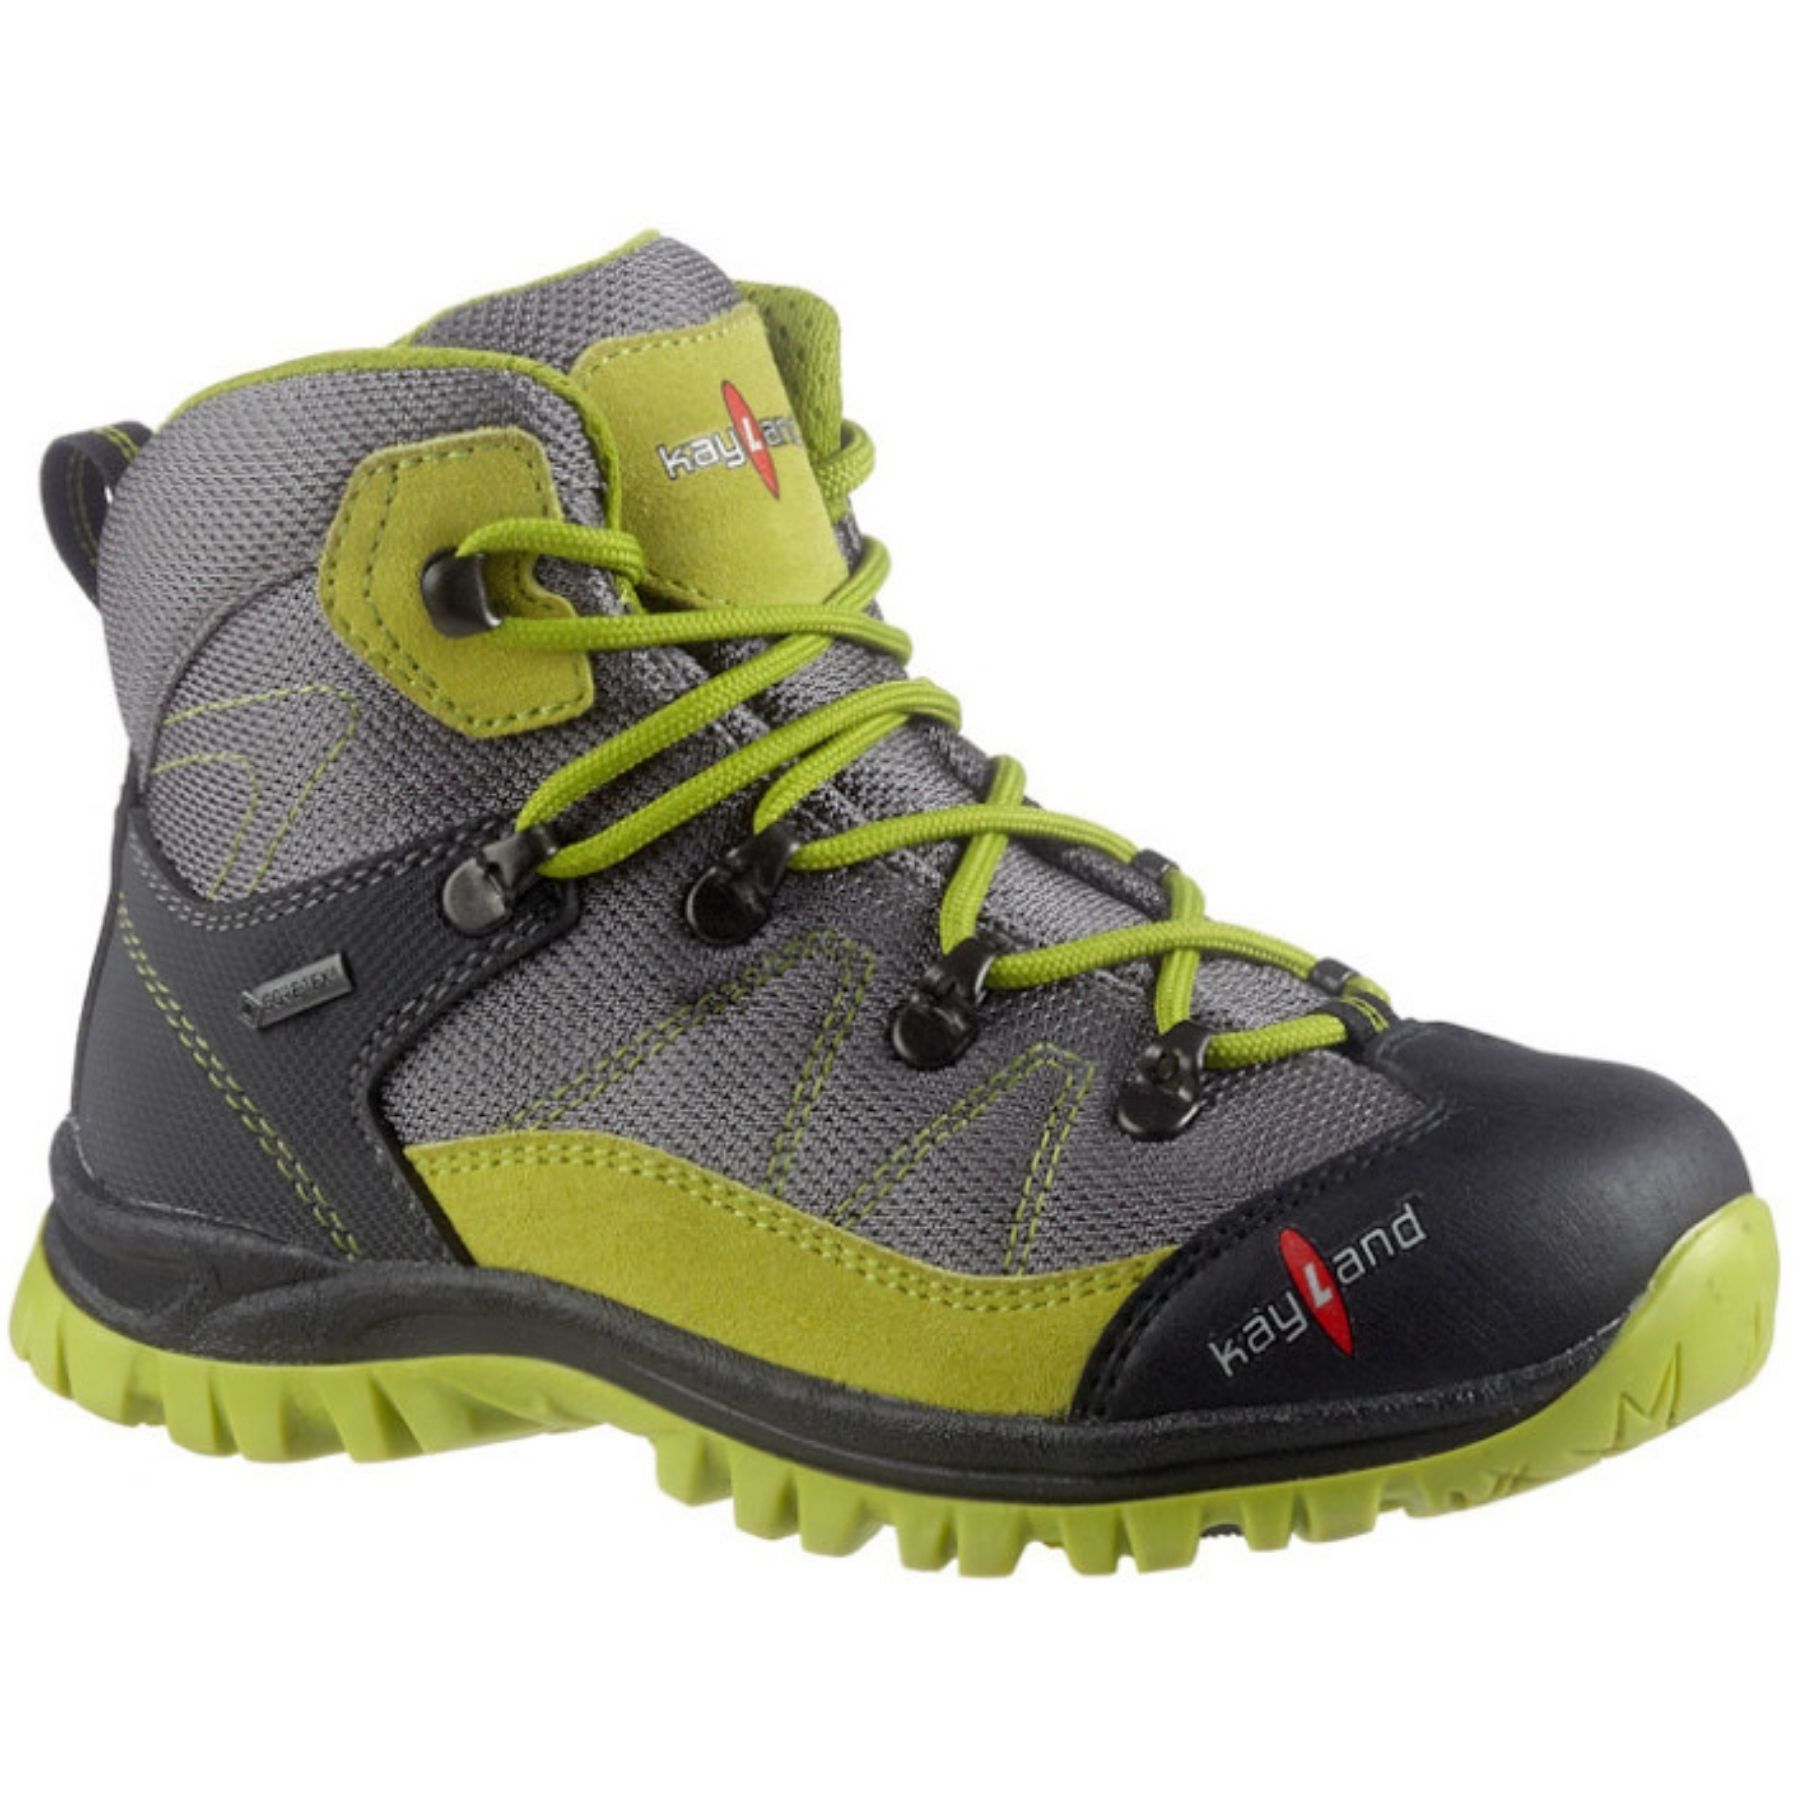 Kayland Cobra GTX - Hiking boots - Kids